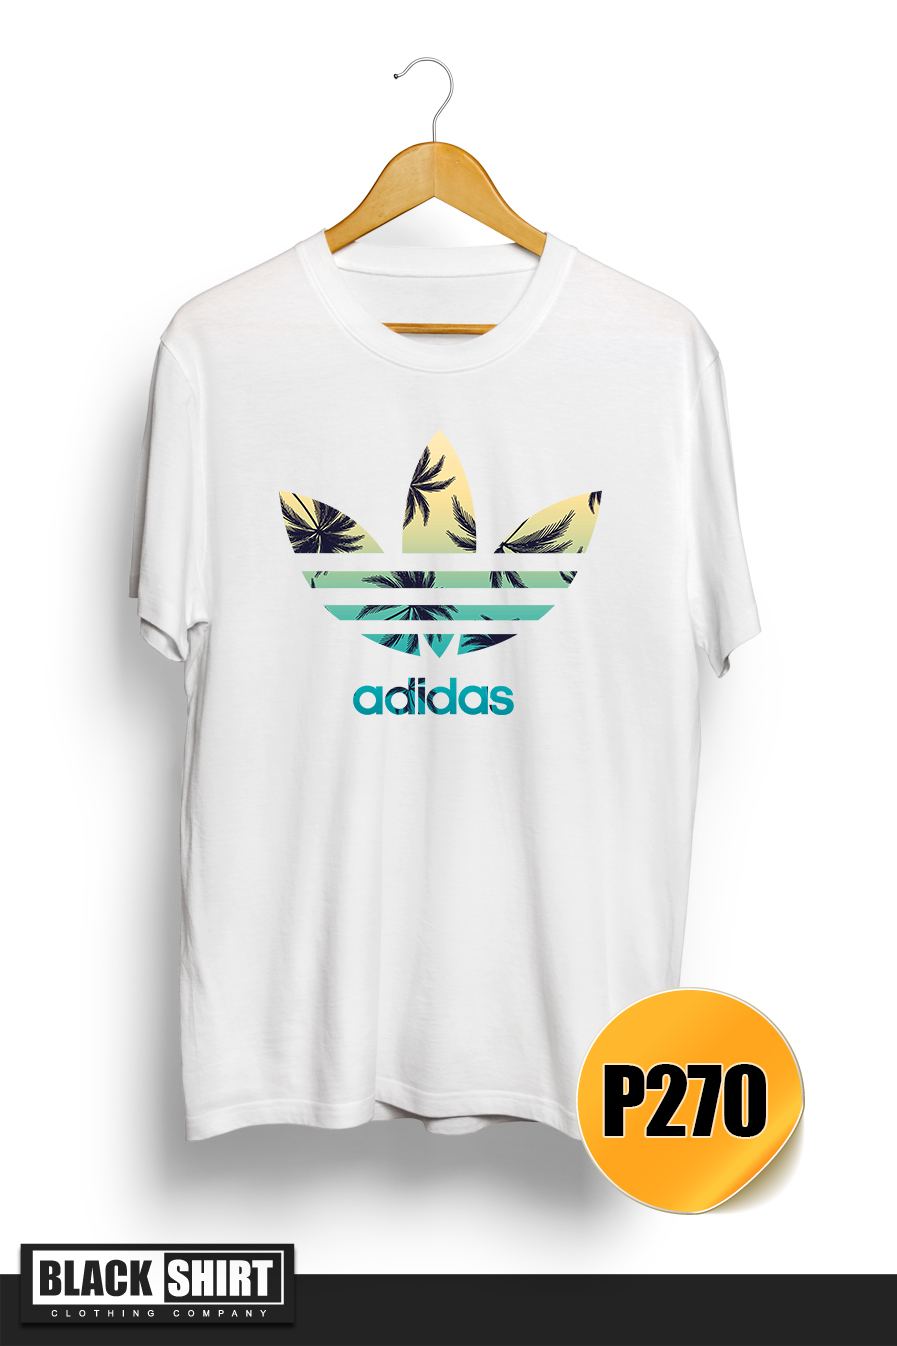 Adidas Logo Streetwear Graphic T-Shirt Design | PH